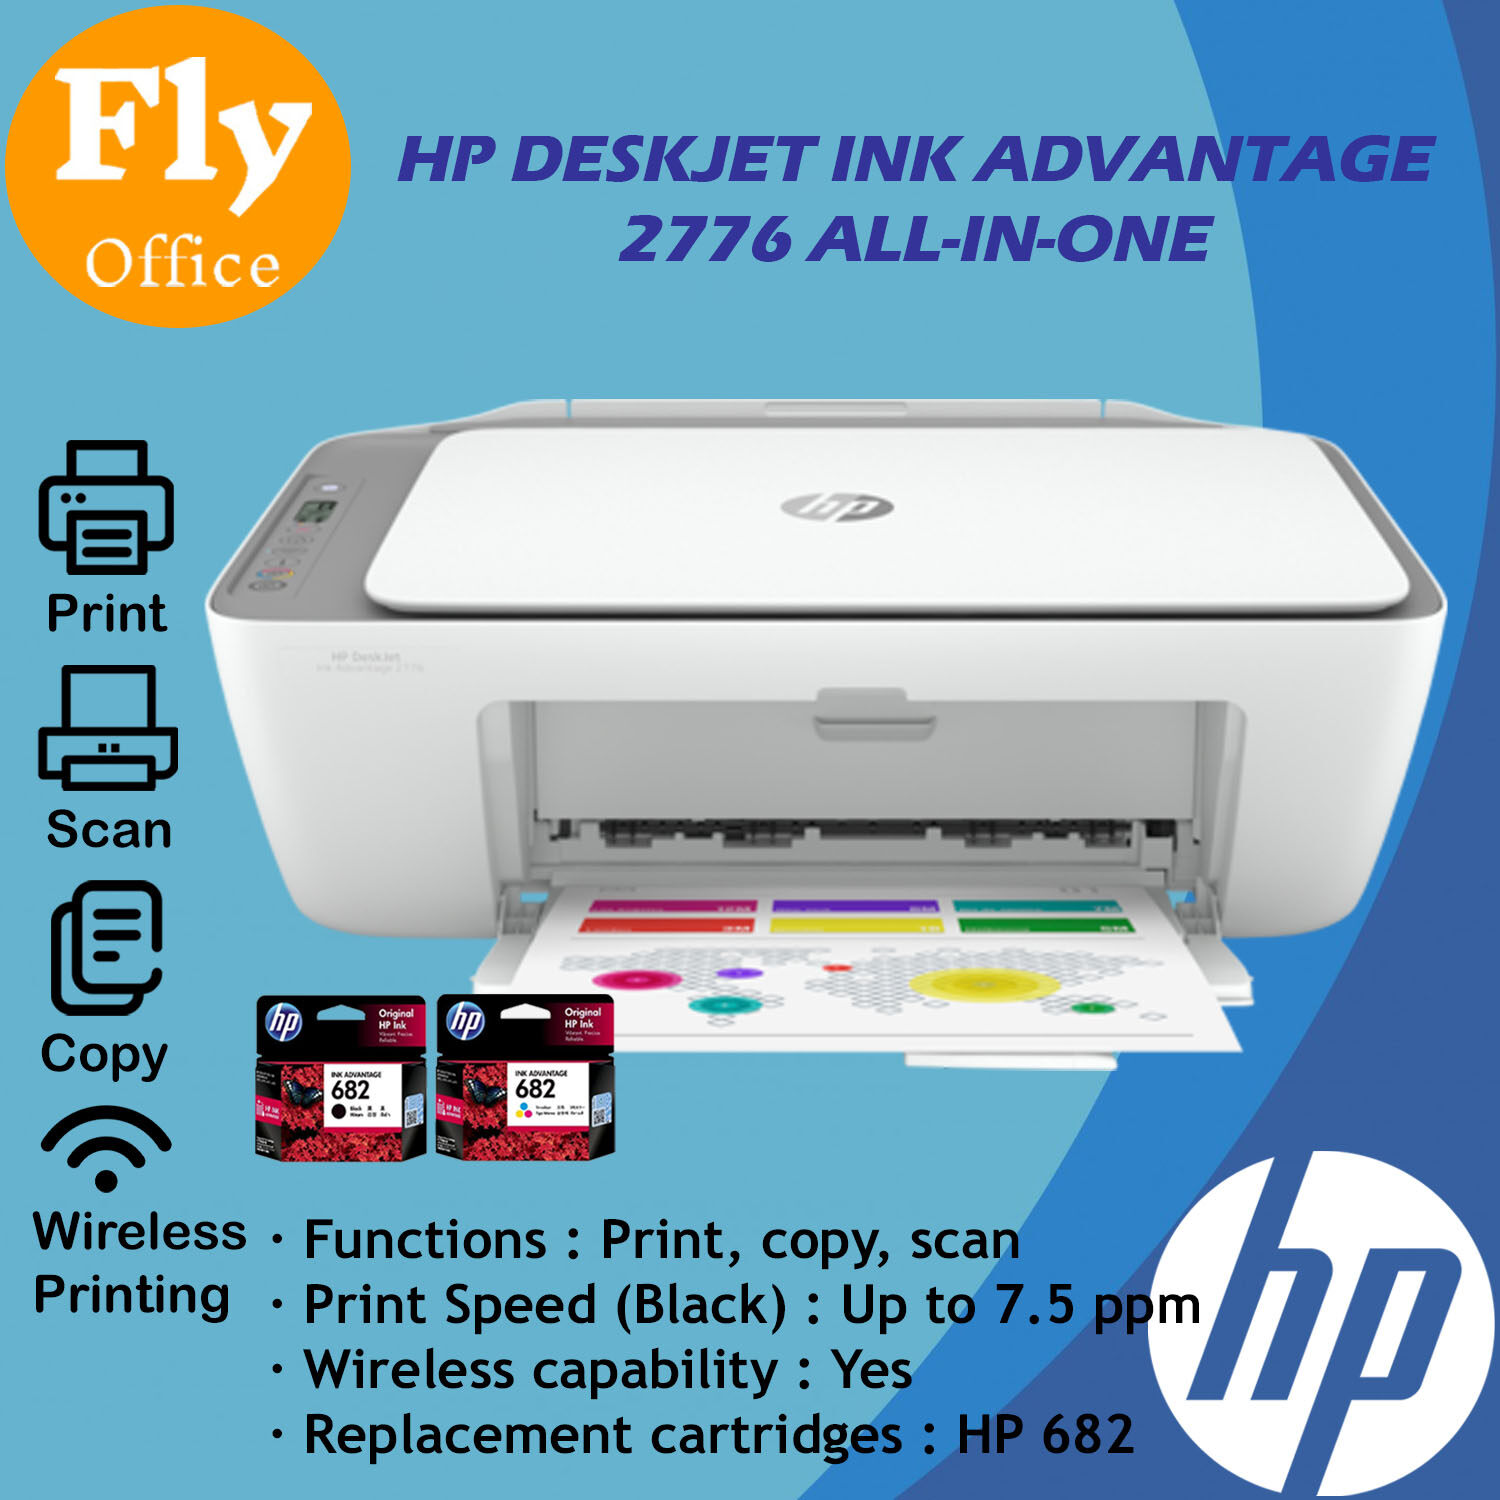 Advantage ink 2776 deskjet hp Product Specifications